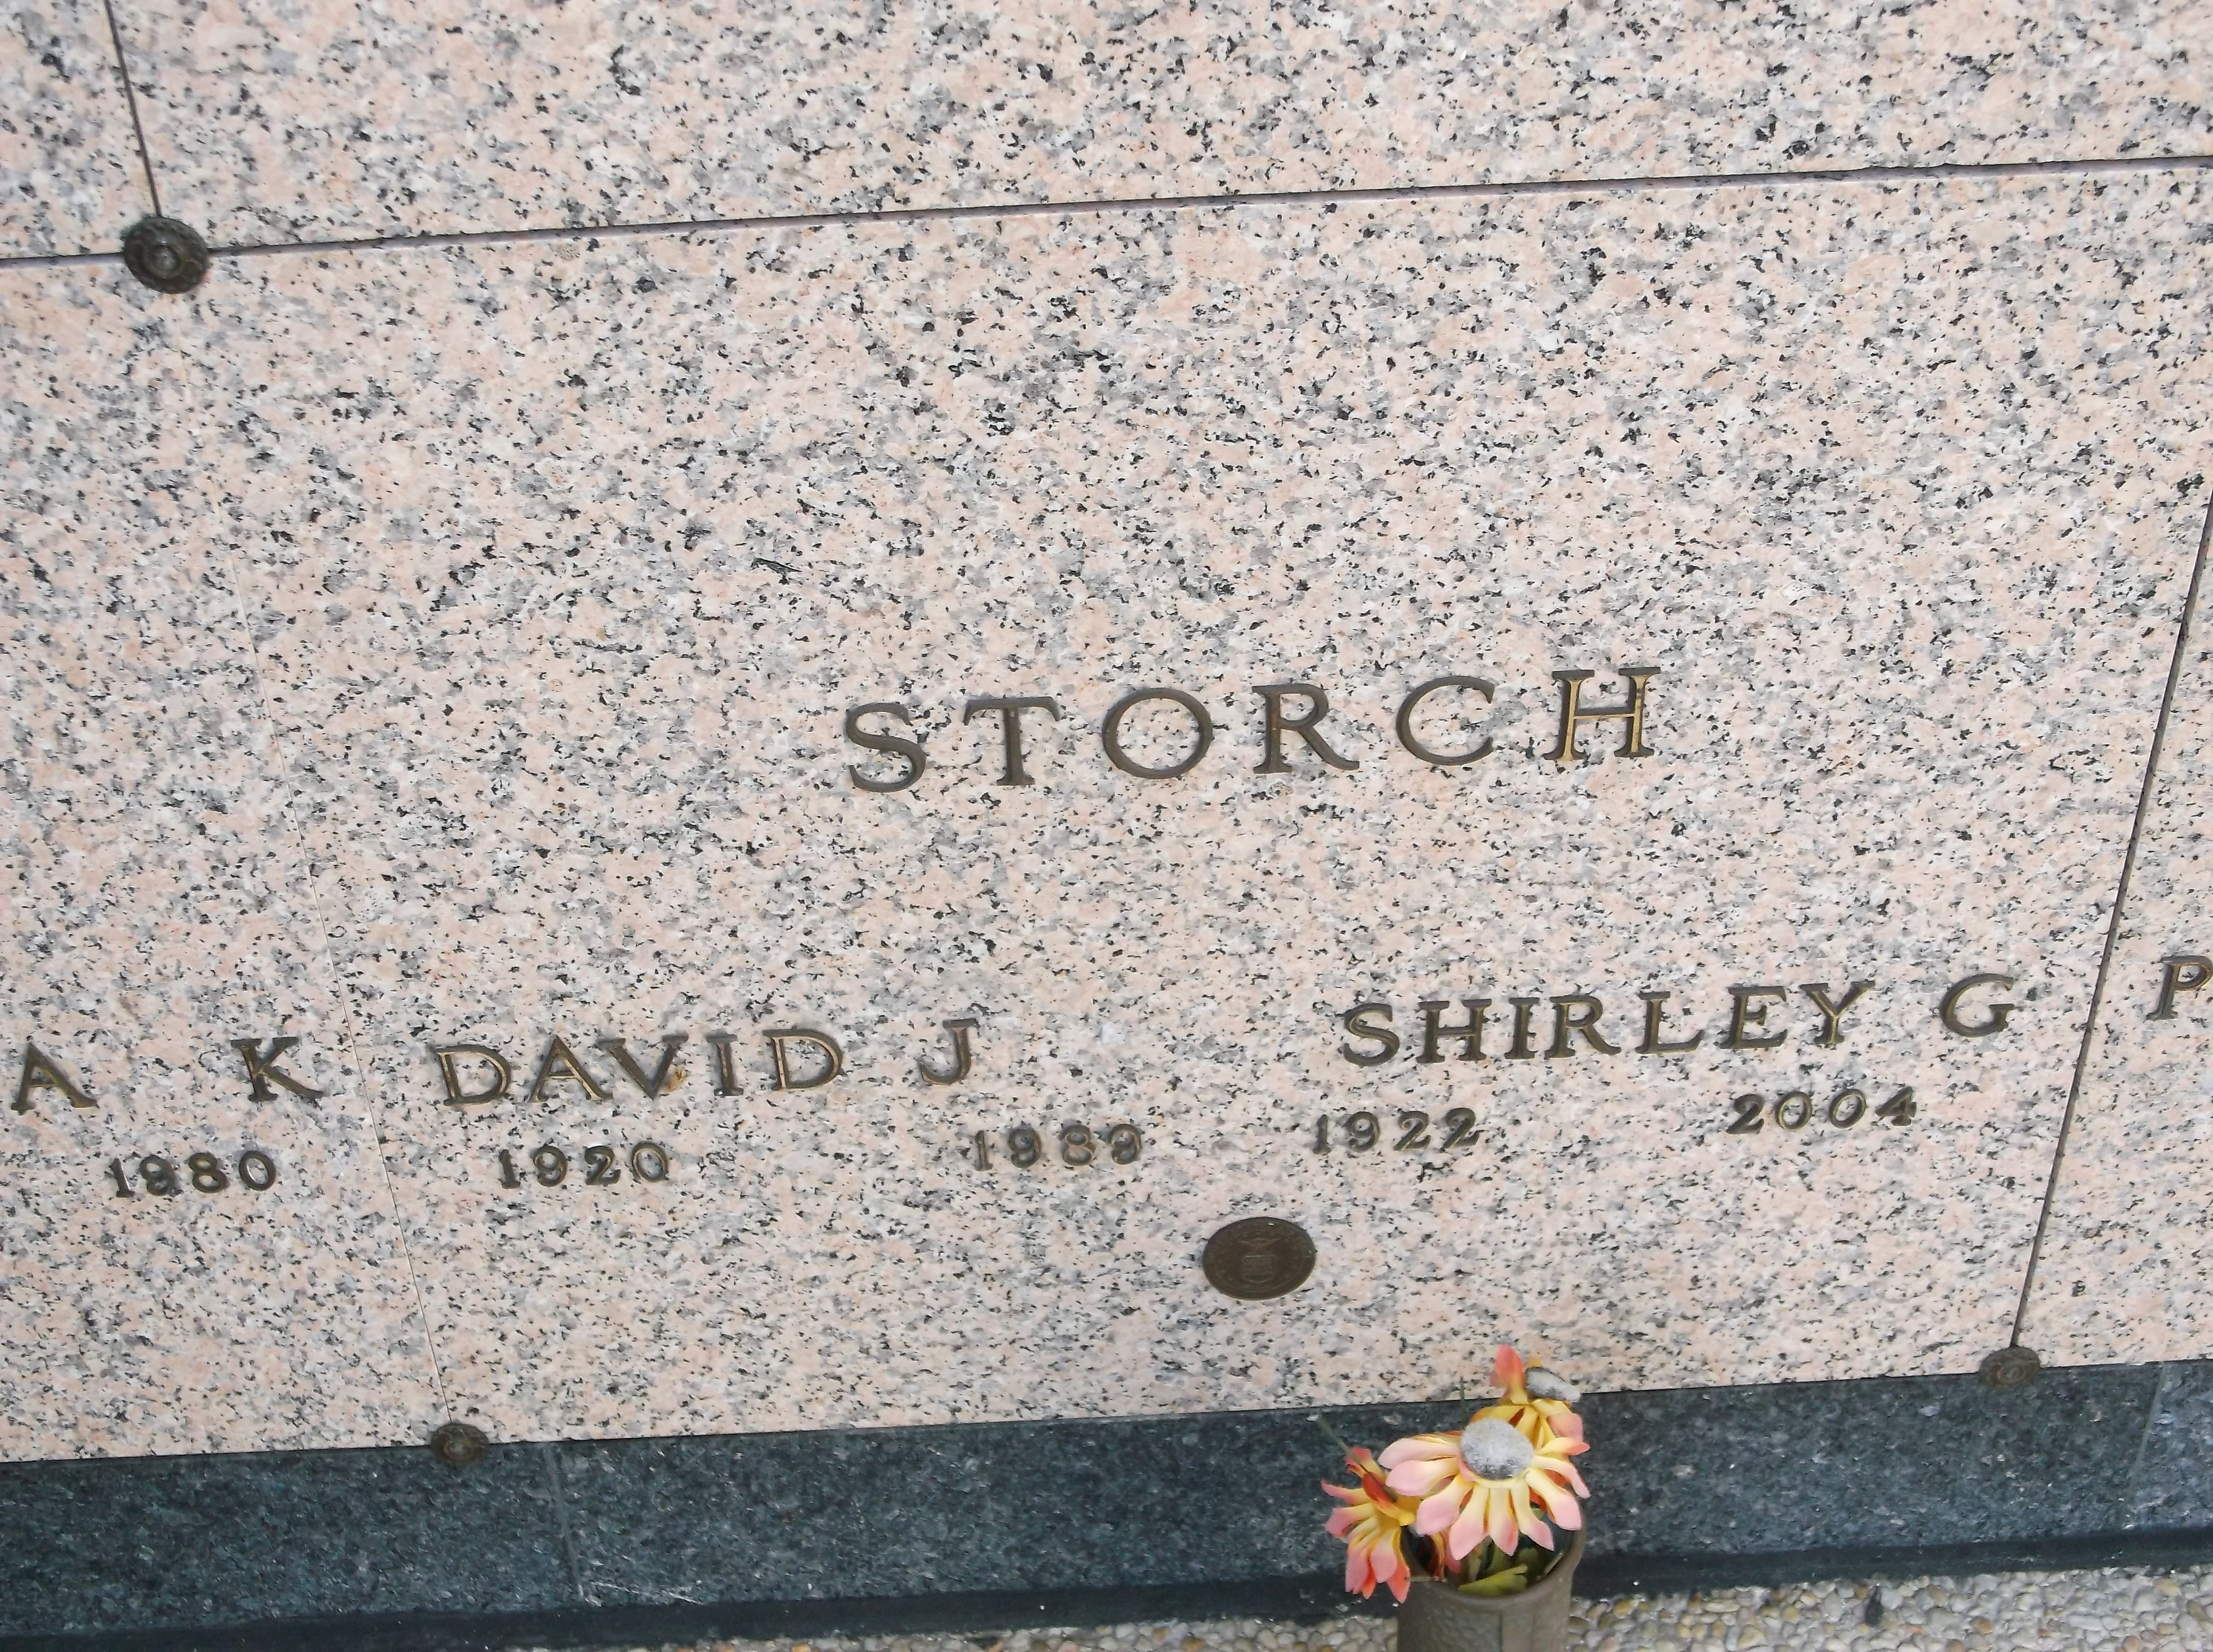 David J Storch